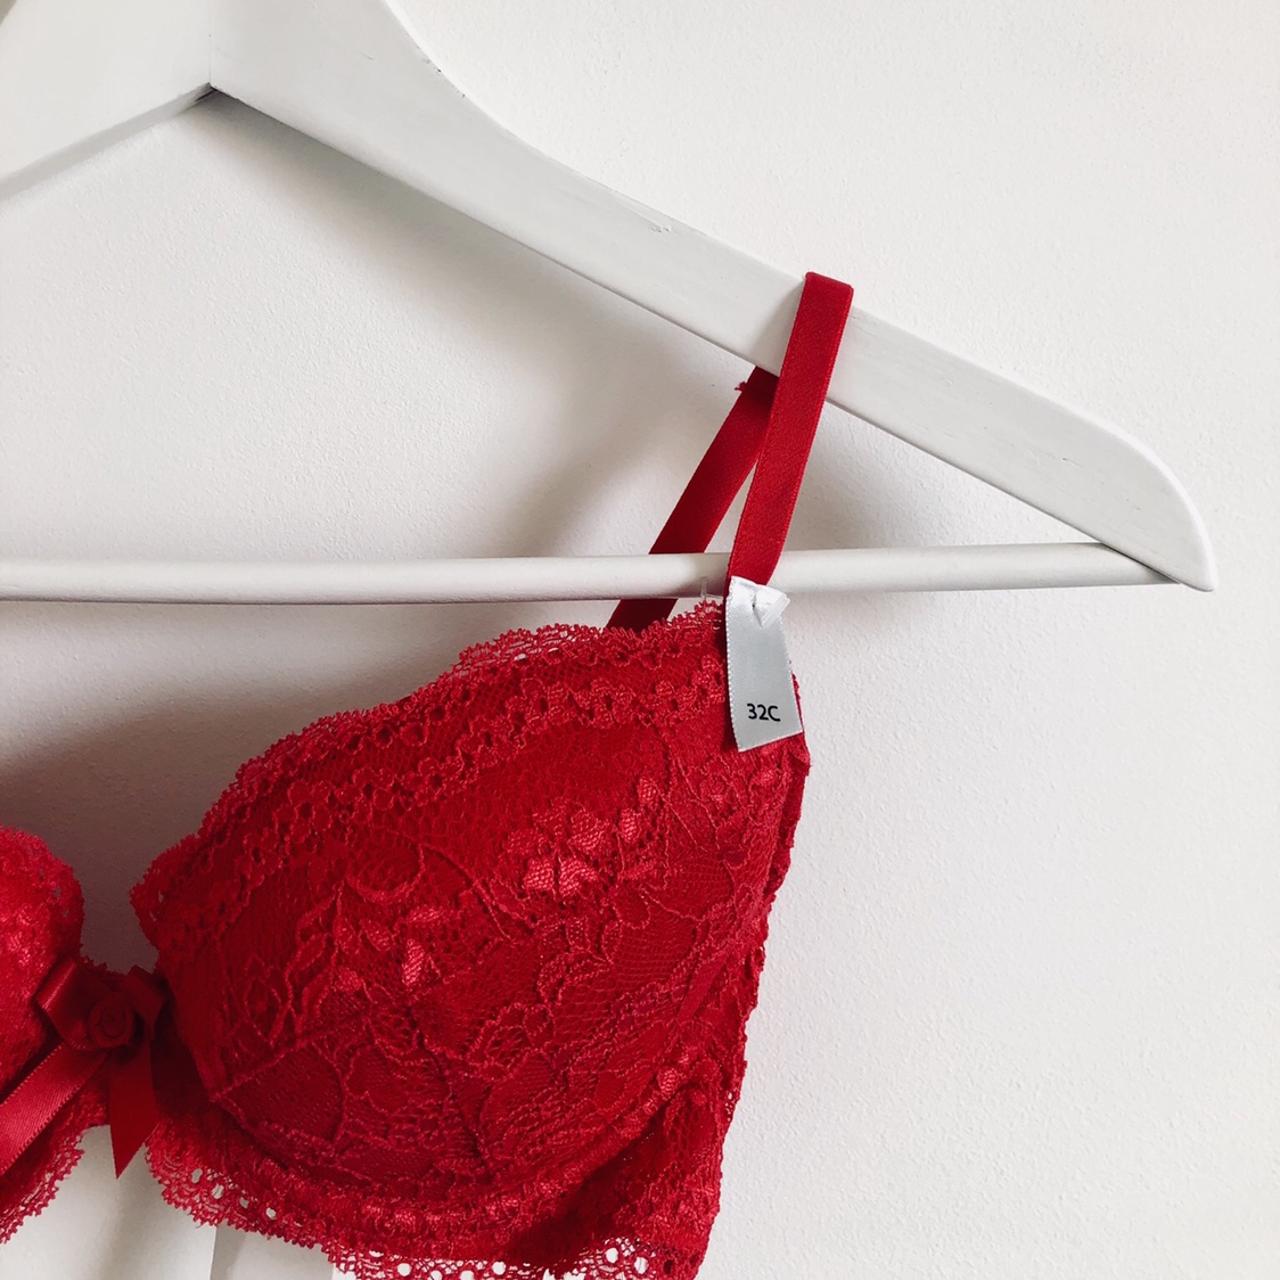 Boux Avenue red lace bra., UK size 32C., Unworn with